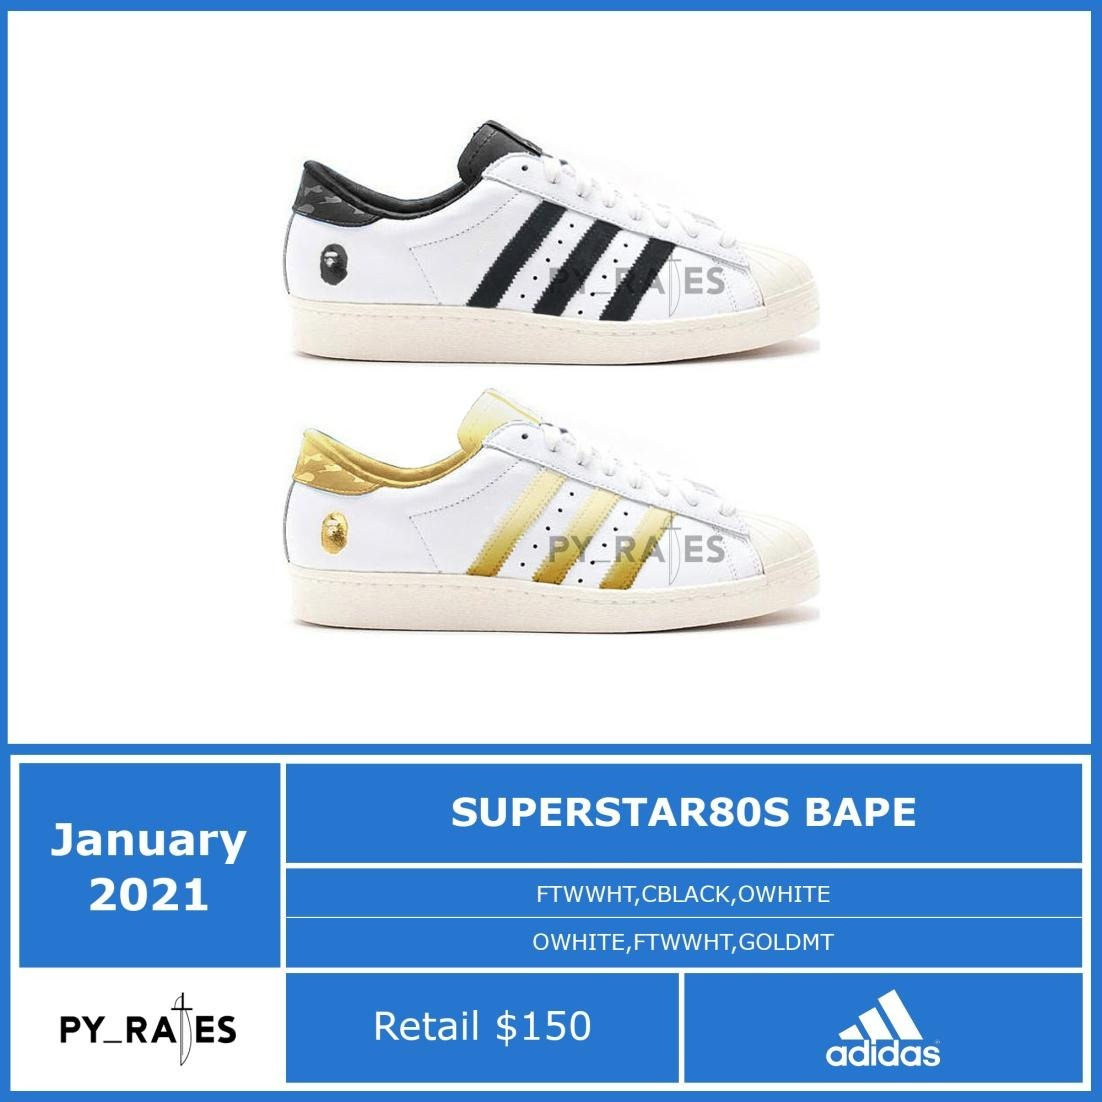 Bape adidas Superstar 80s Release Date